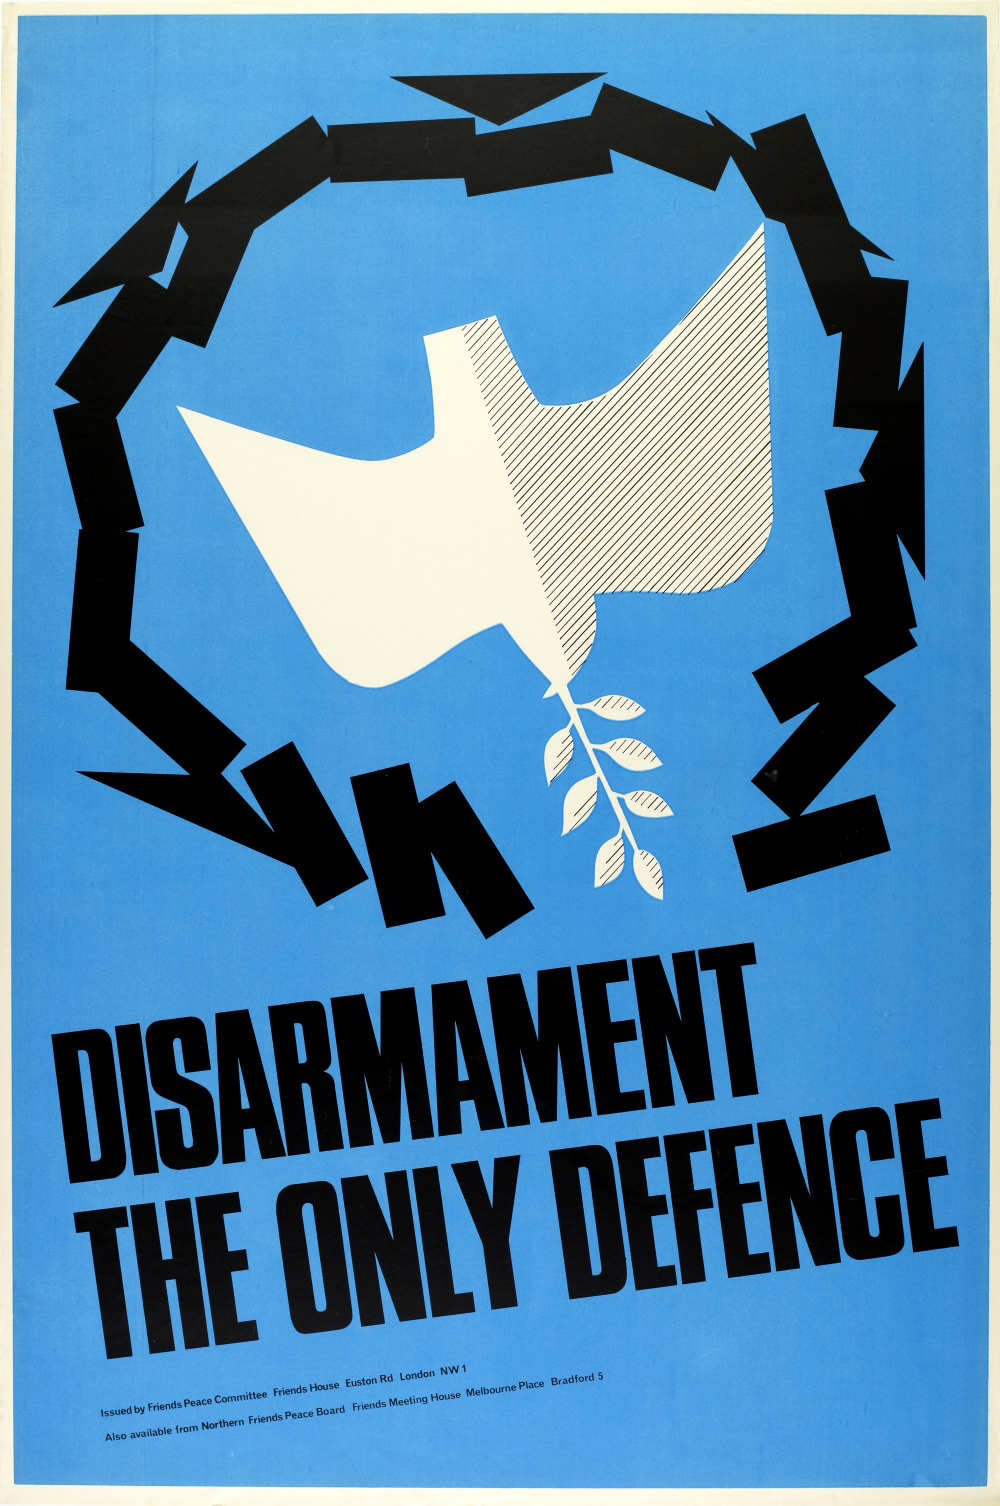 Disarmament poster